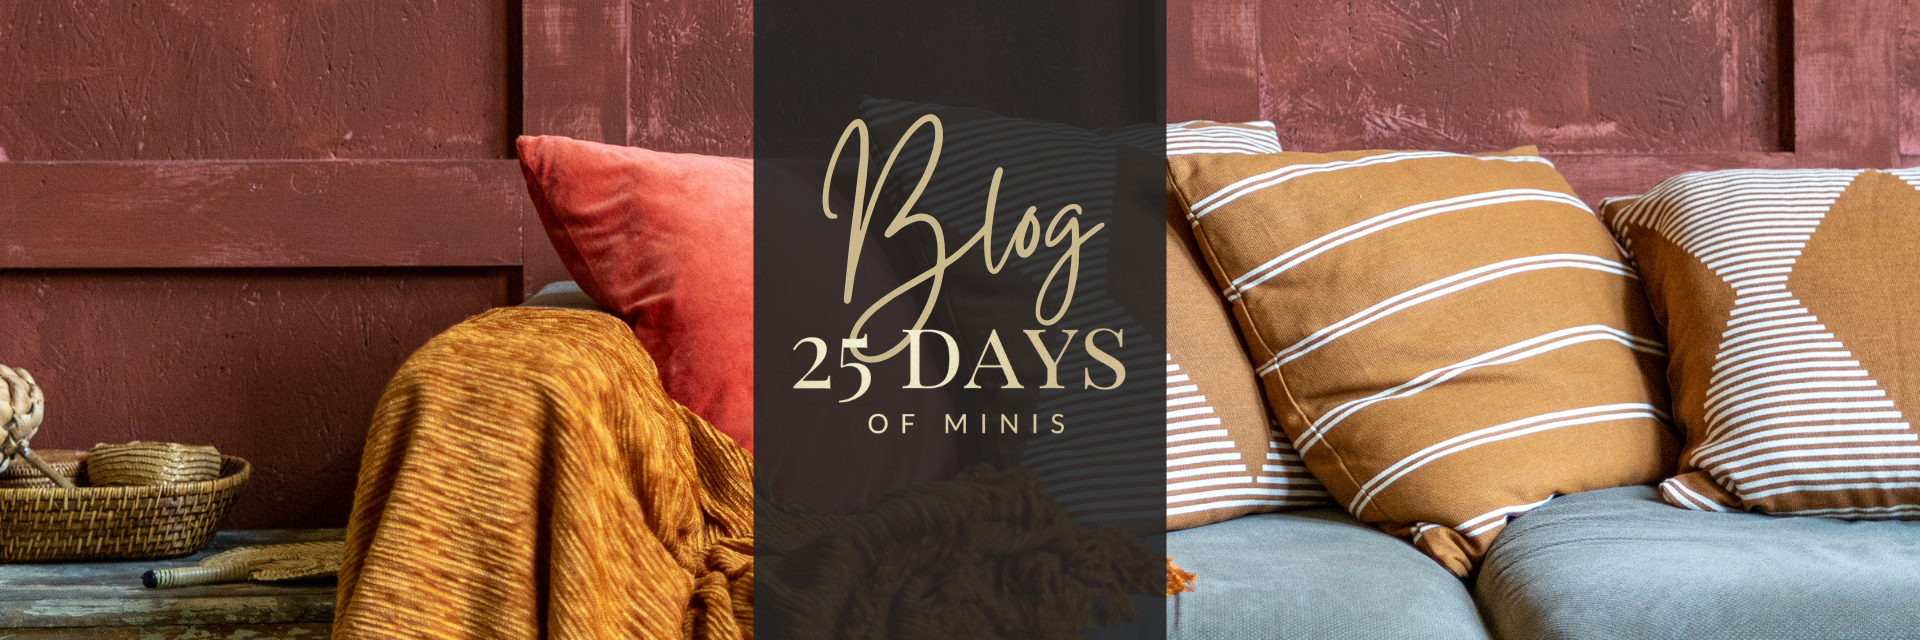 25 Days Blog Header